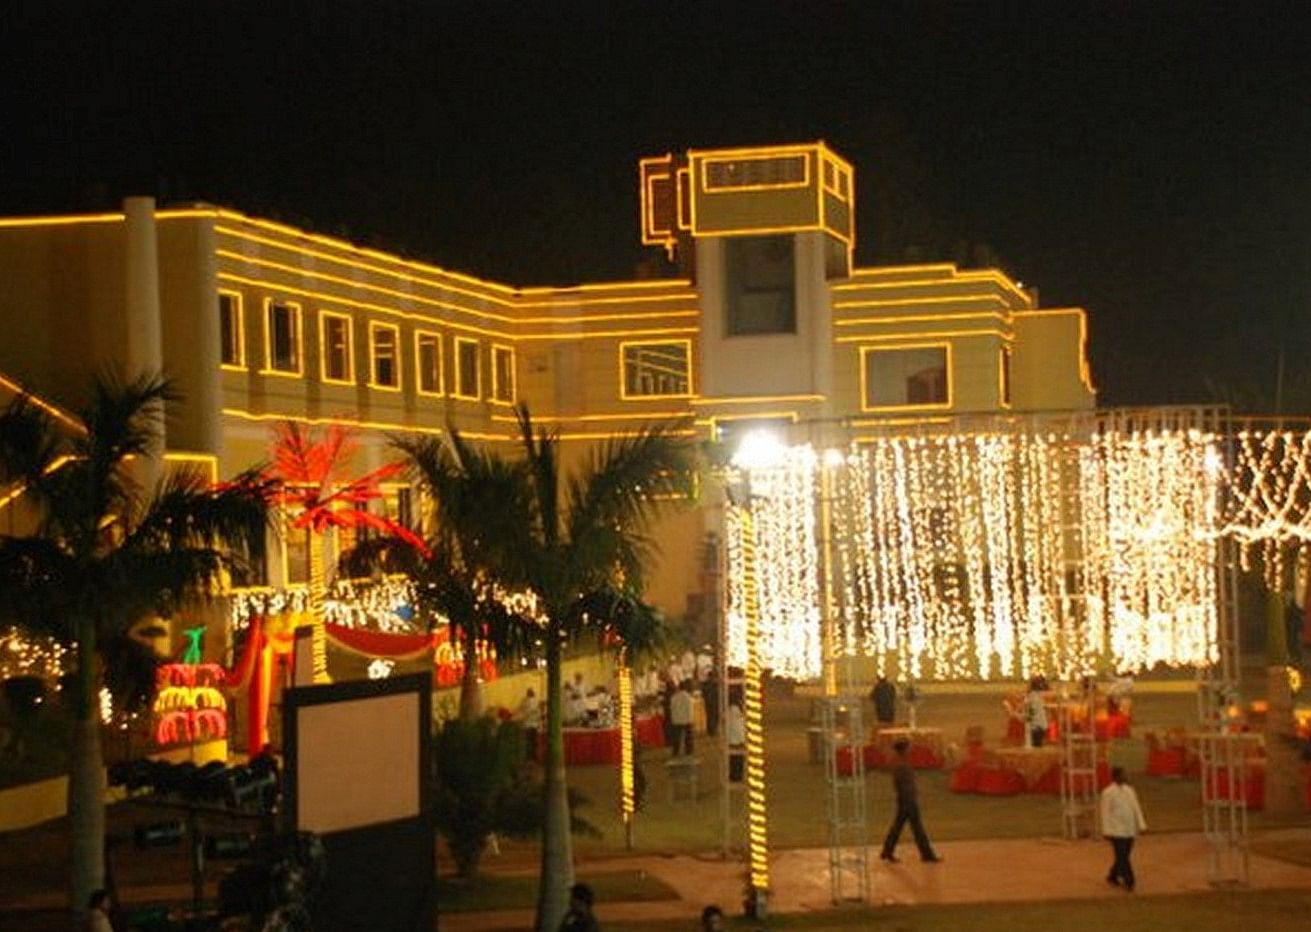 Lavanya Resorts And Motel in GT Karnal Road, Delhi